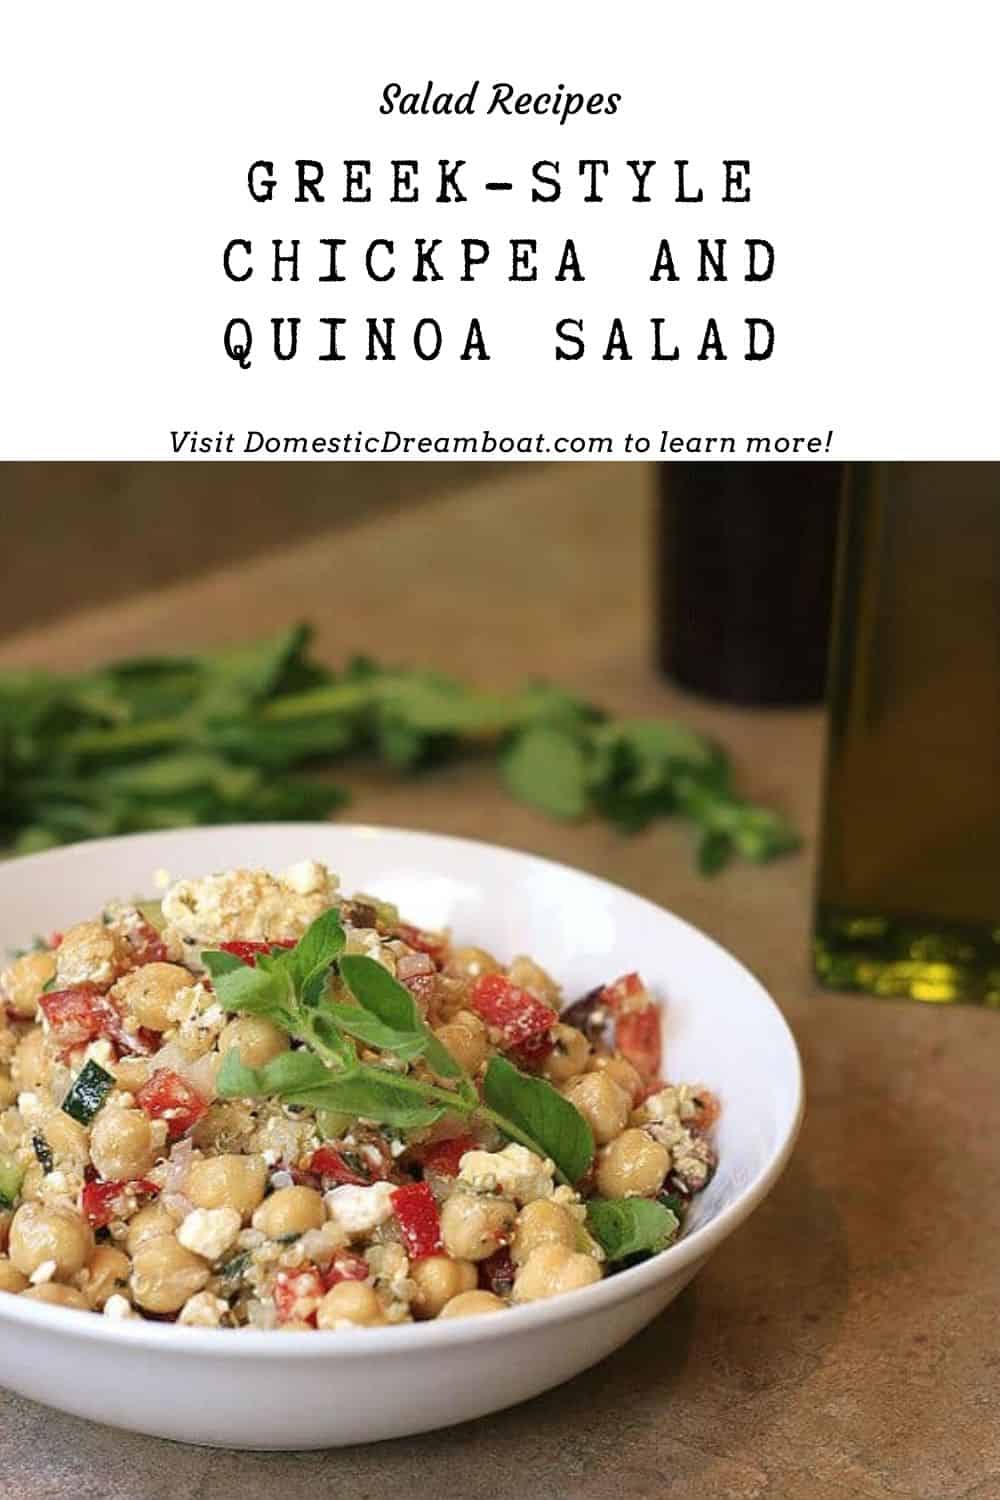 Chickpea and quinoa salad